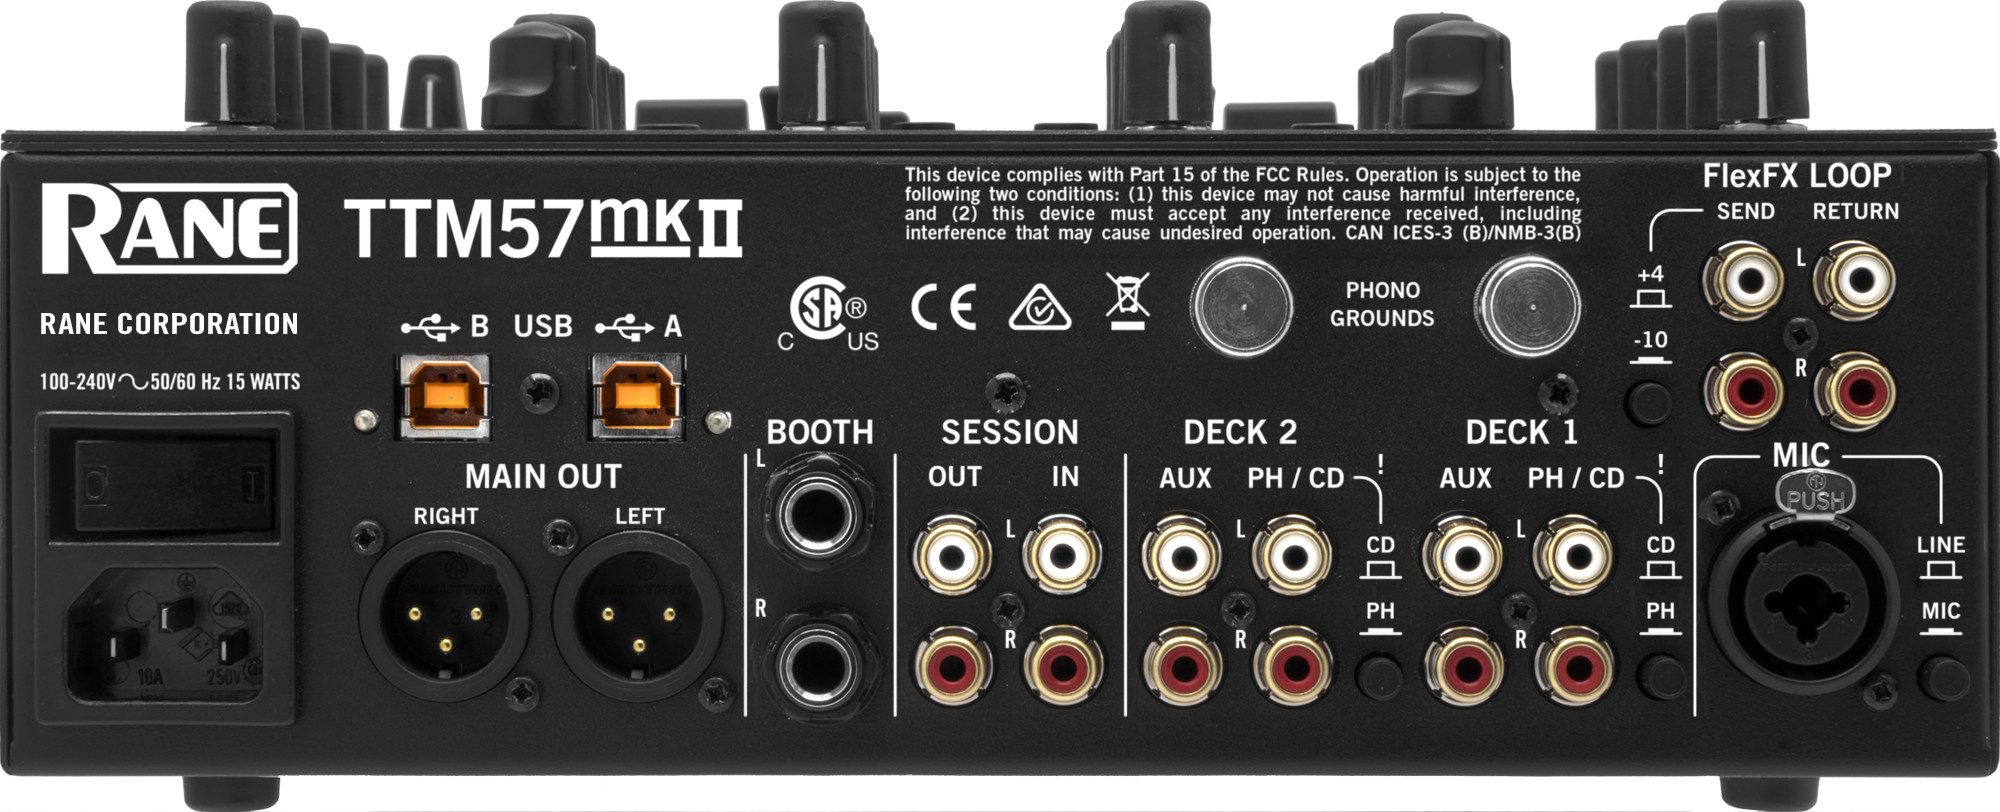 Rane Ttm57 Mkii - Mixer DJ - Variation 2